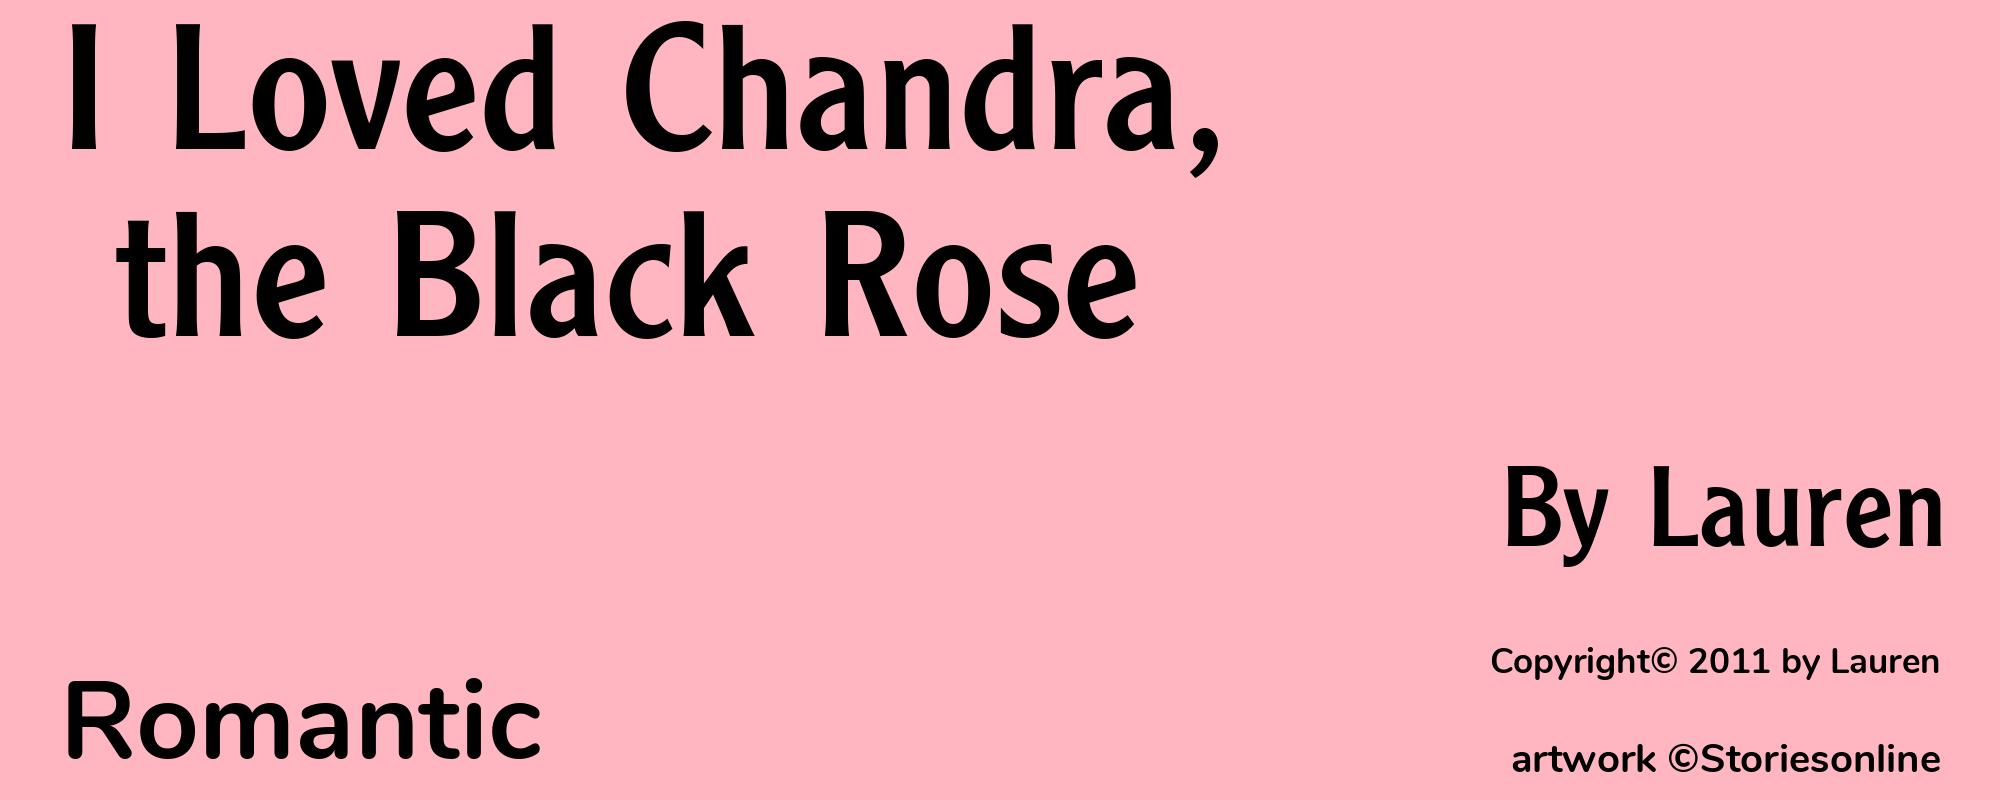 I Loved Chandra, the Black Rose - Cover